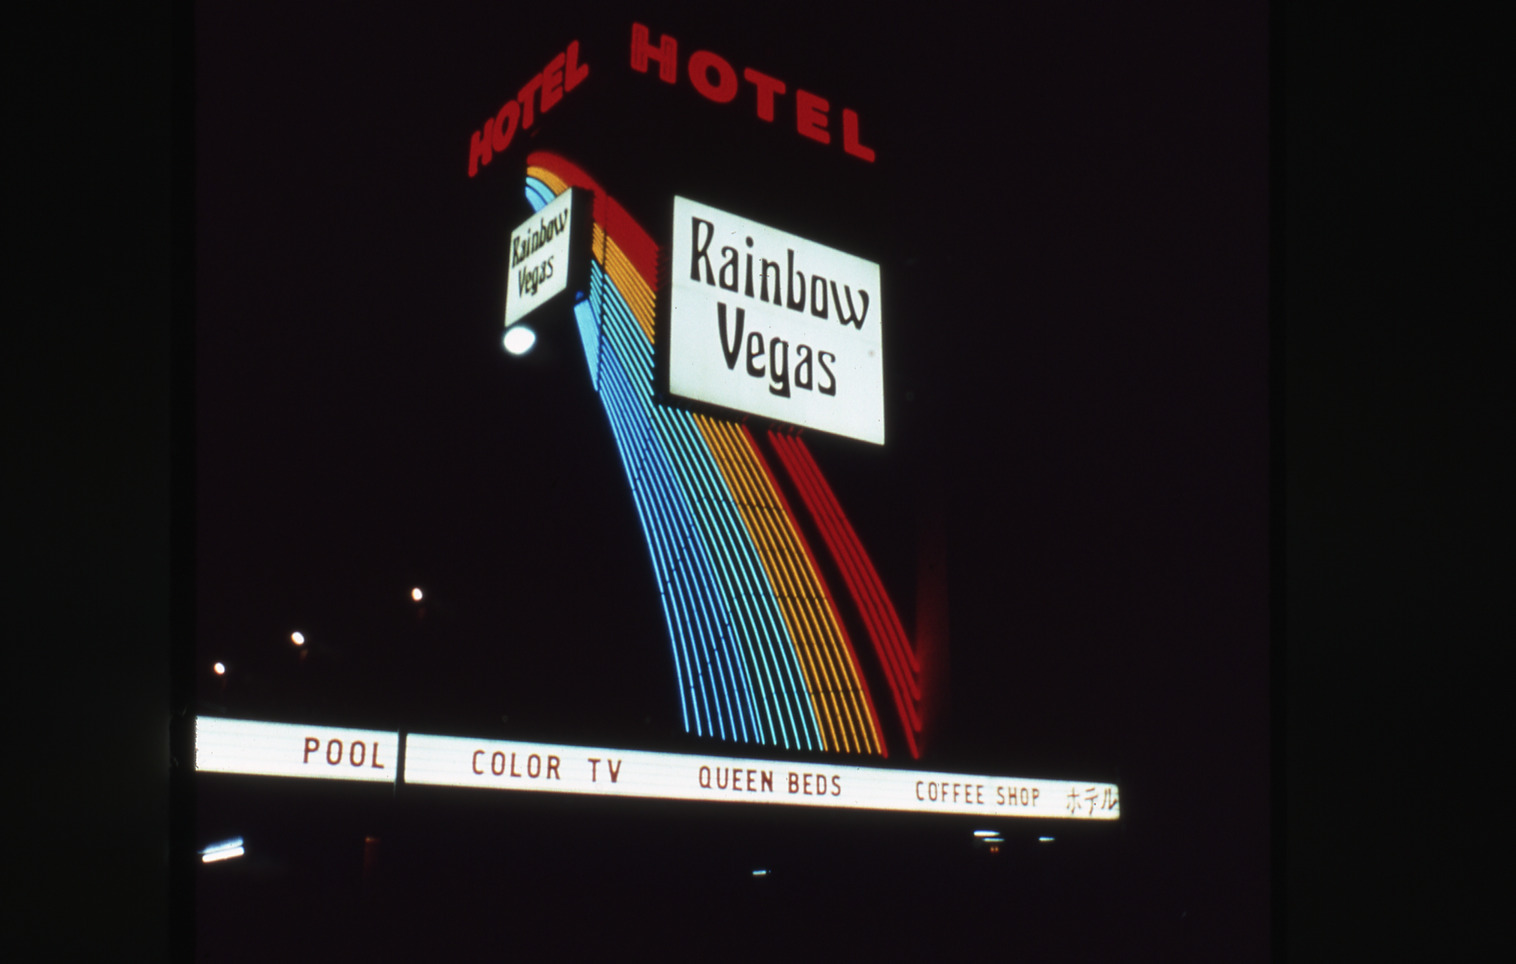 Rainbow Vegas Hotel wall signs, Las Vegas, Nevada: photographic print